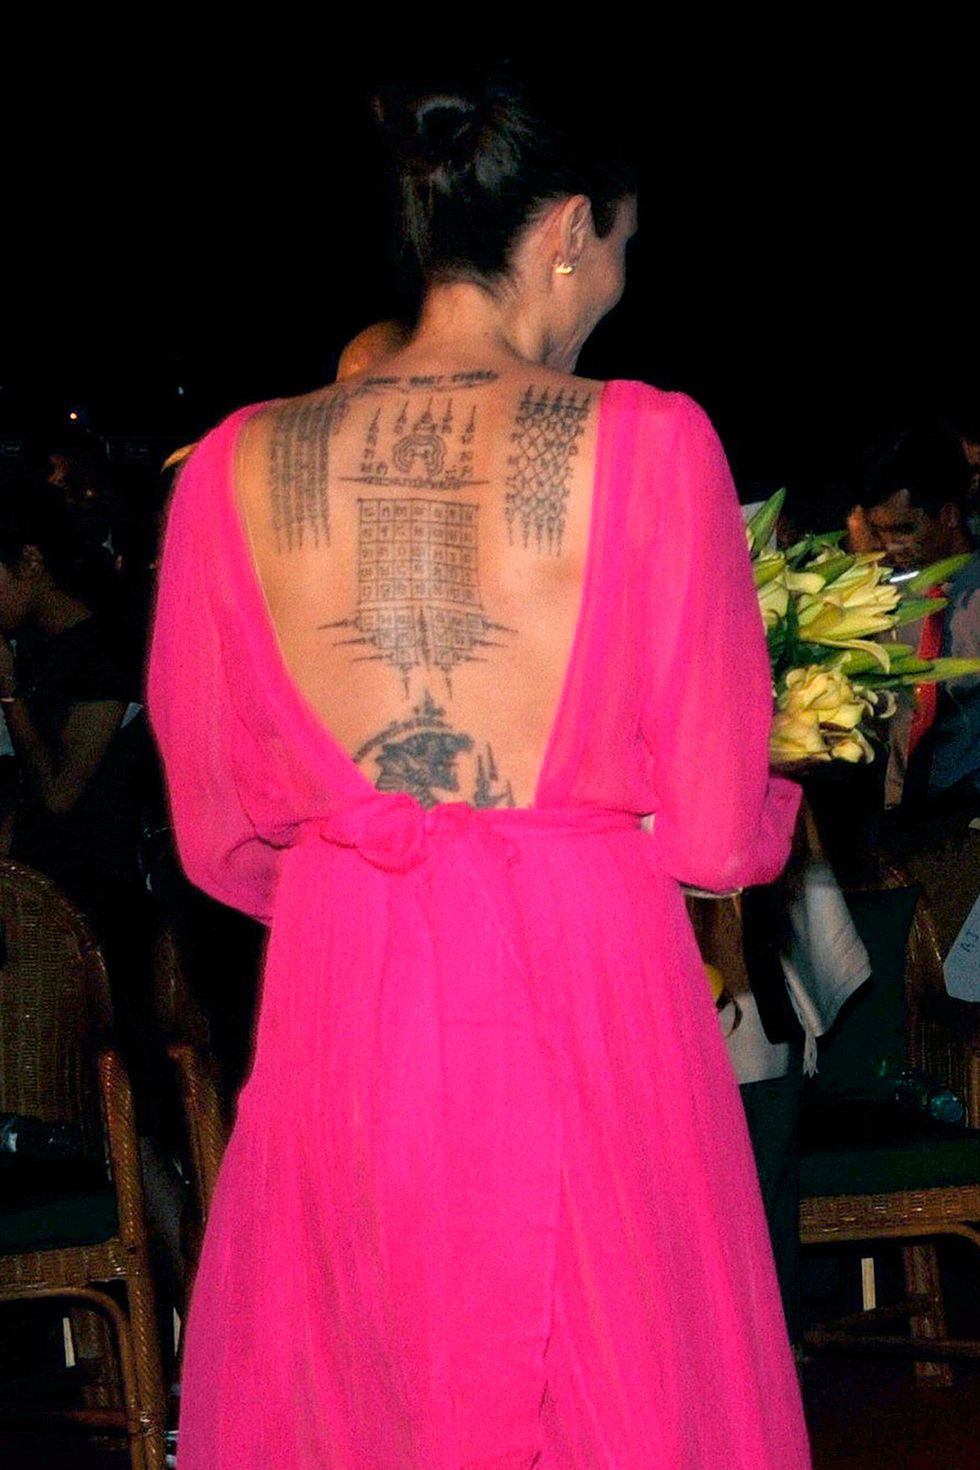 Angelina Jolie tattoo